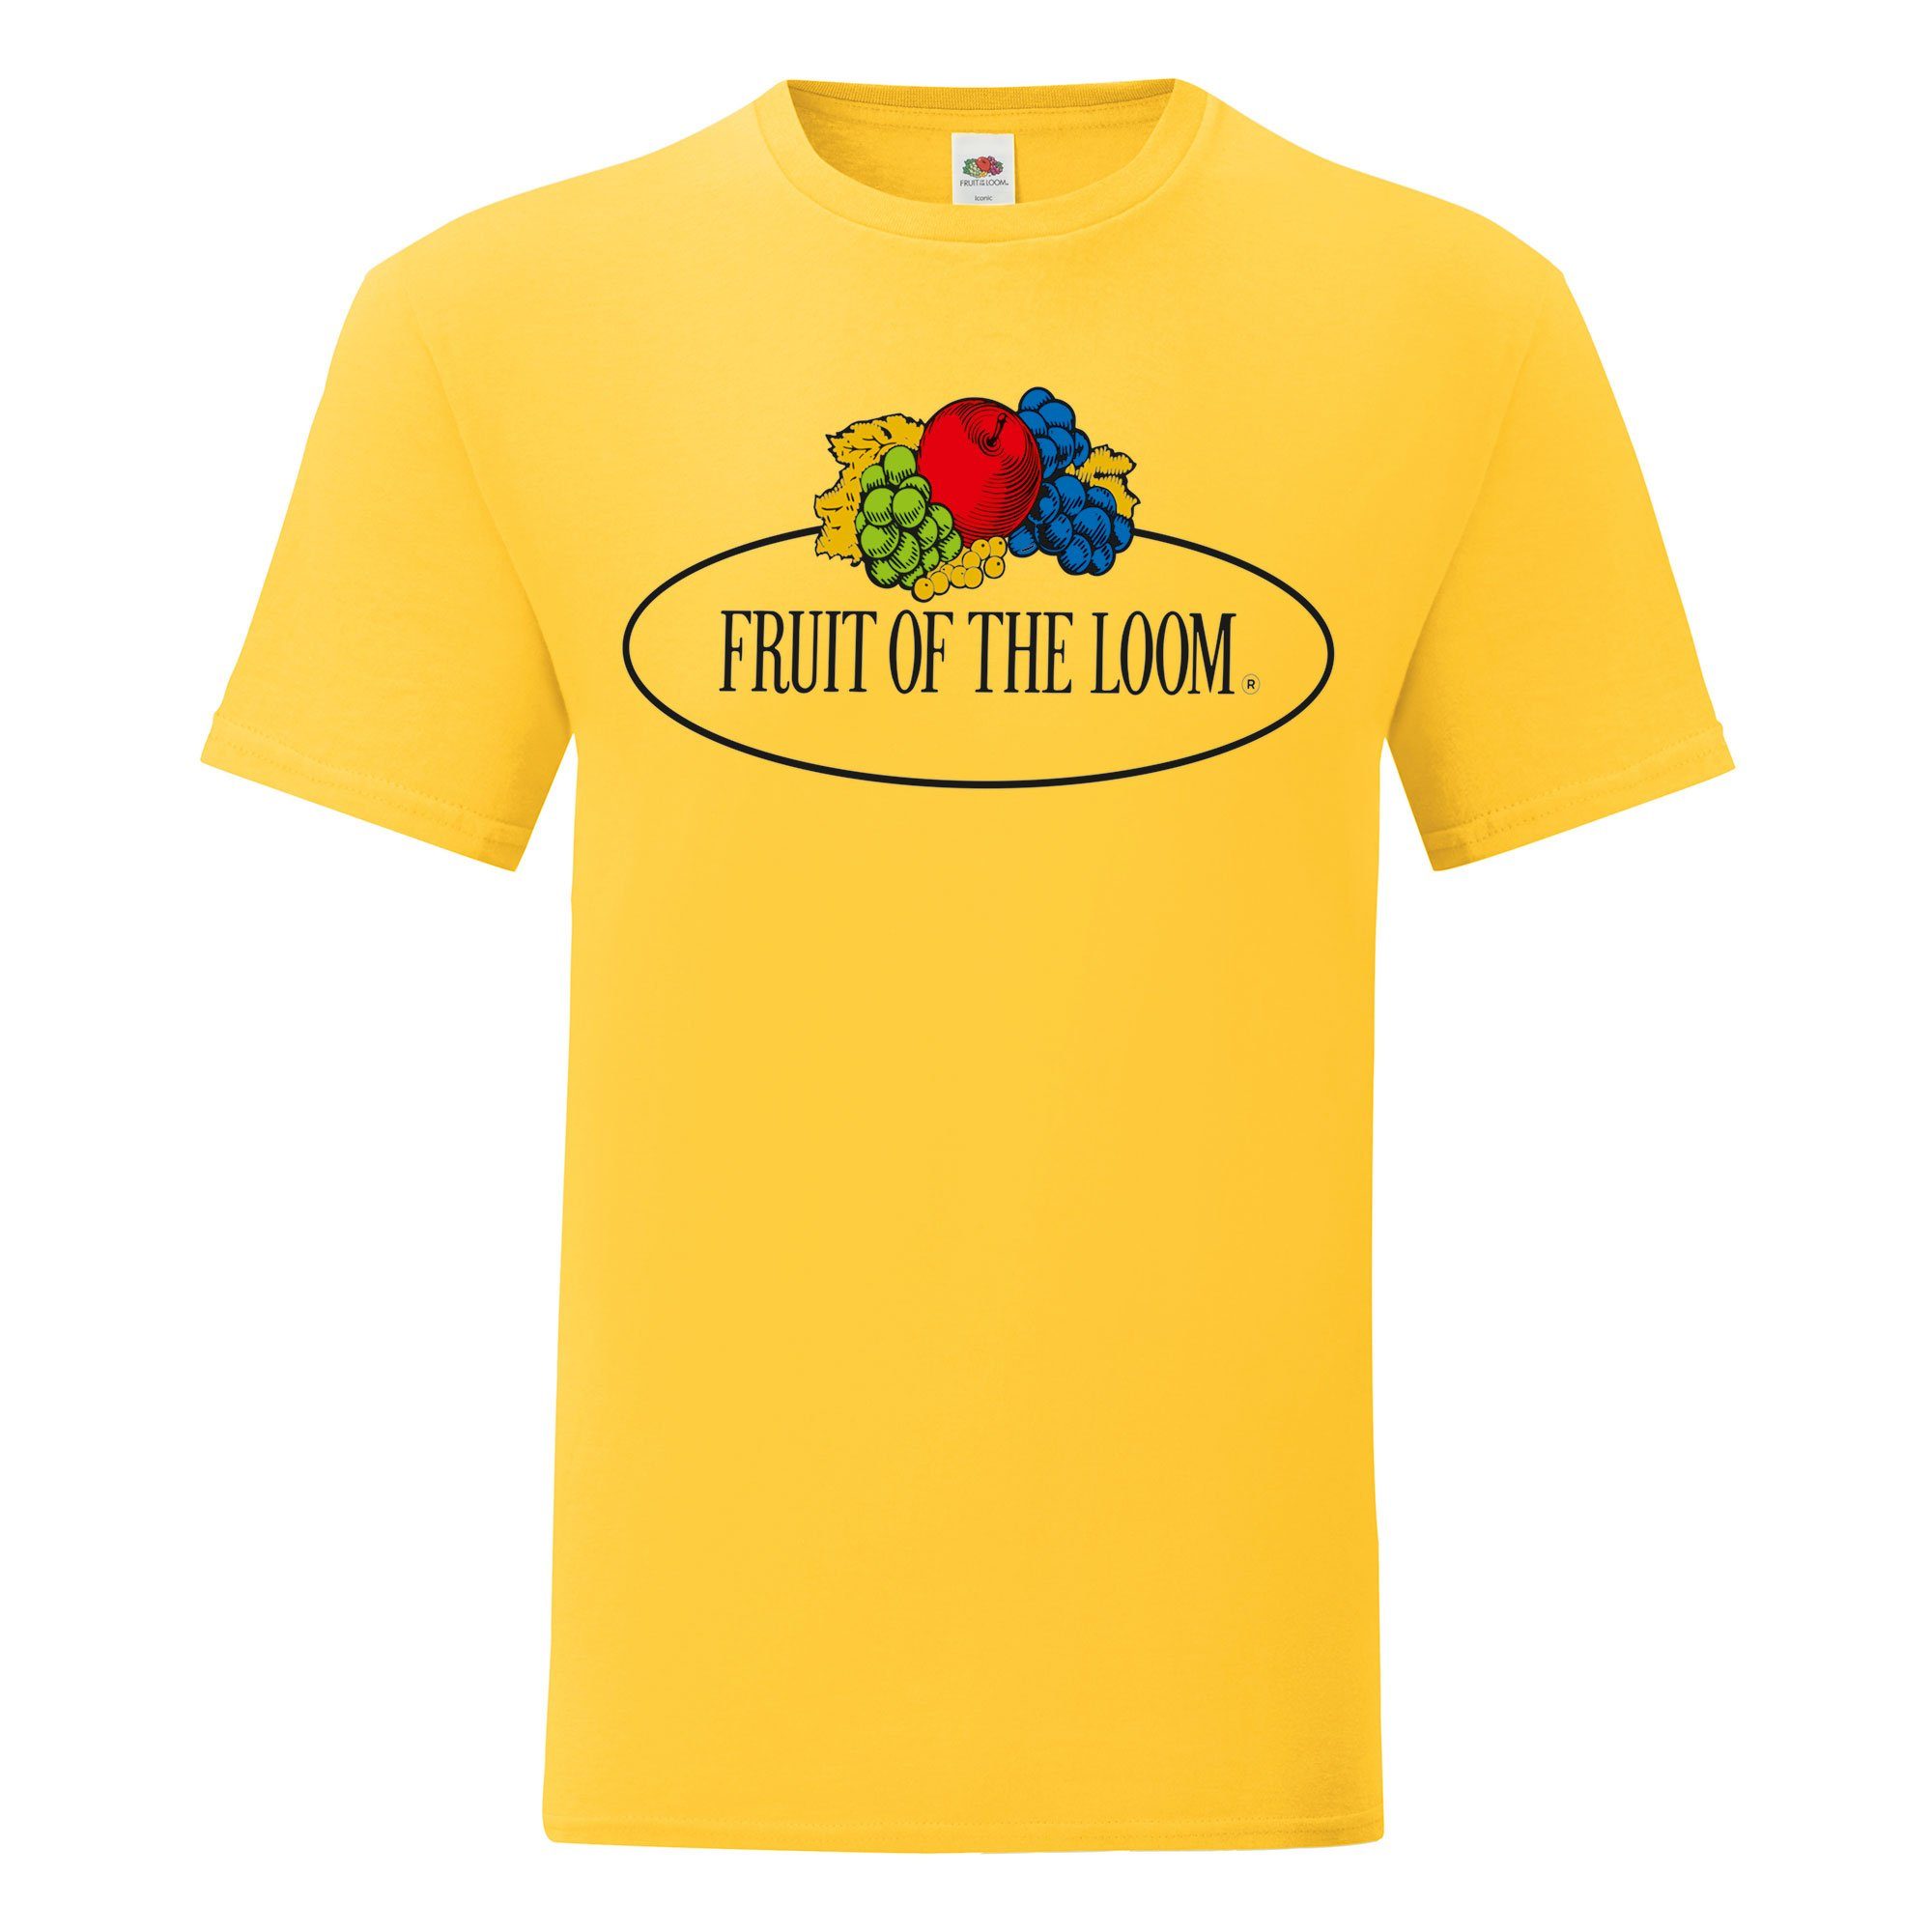 Rundhalsshirt 150 - Fruit sonnenblumengelb Iconic Vintage-Logo of the Loom groß T-Shirt